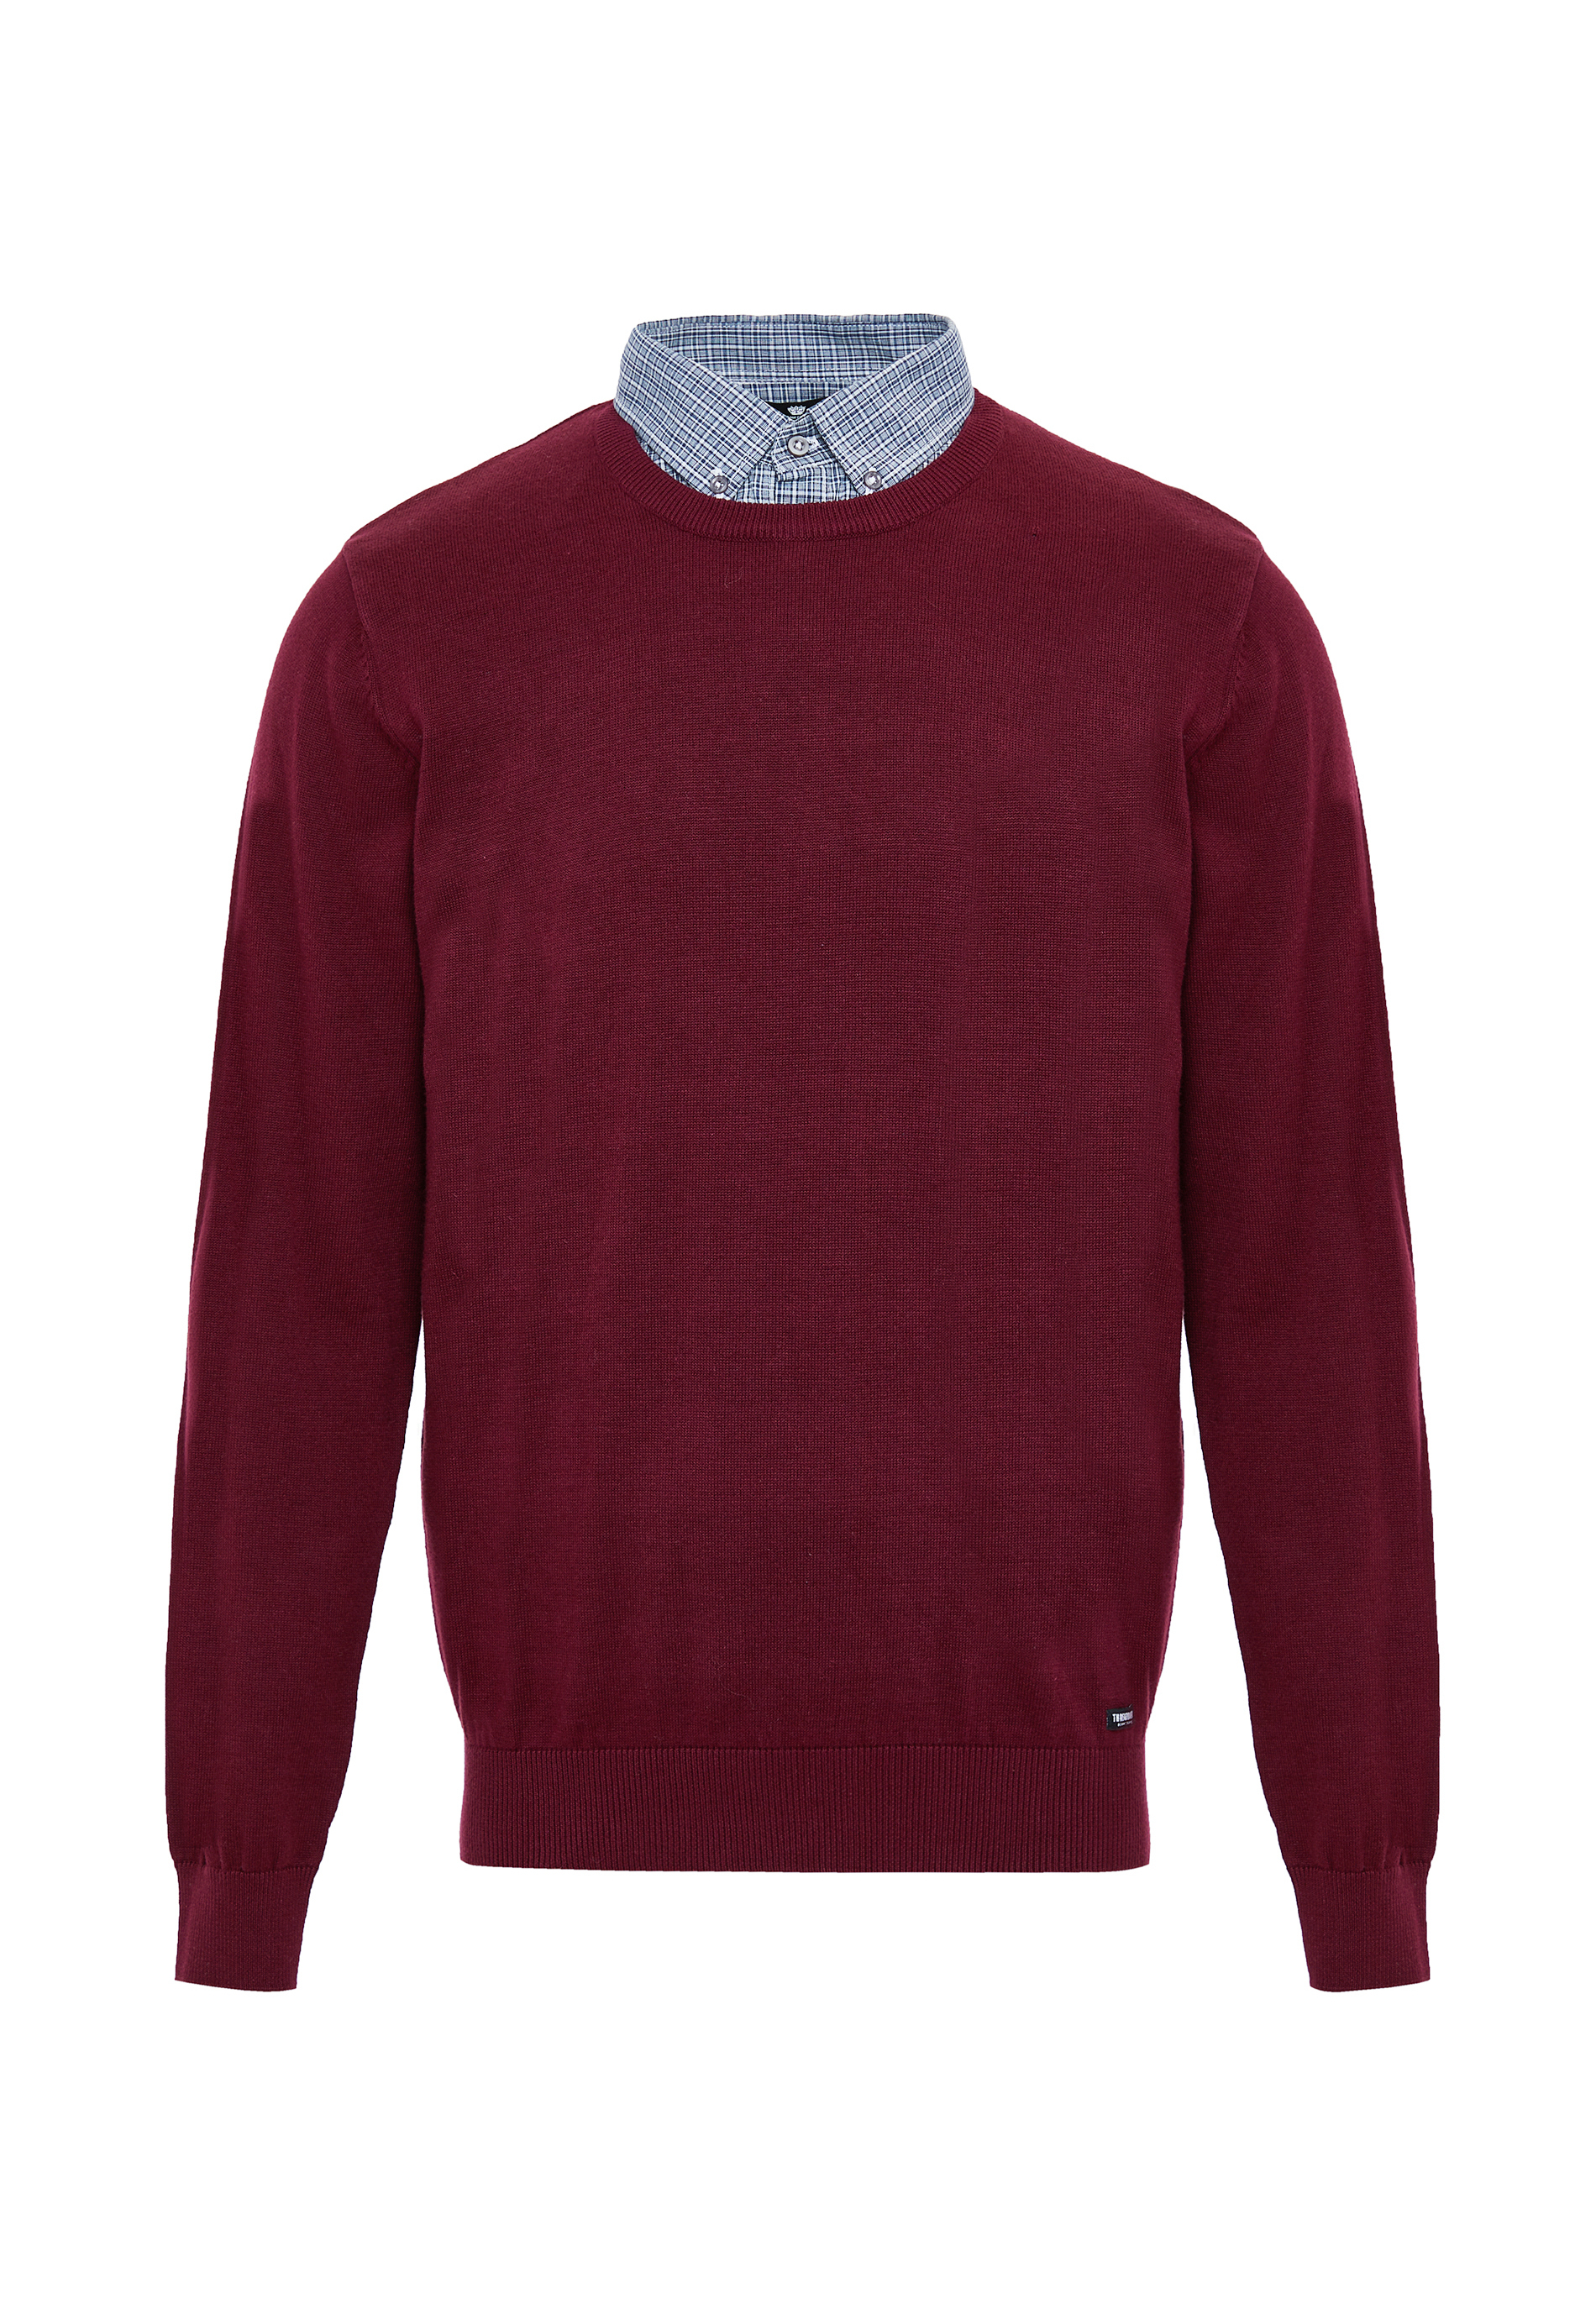 Пуловер Threadbare Strick Gibbs, темно красный пуловер threadbare strick reed черный